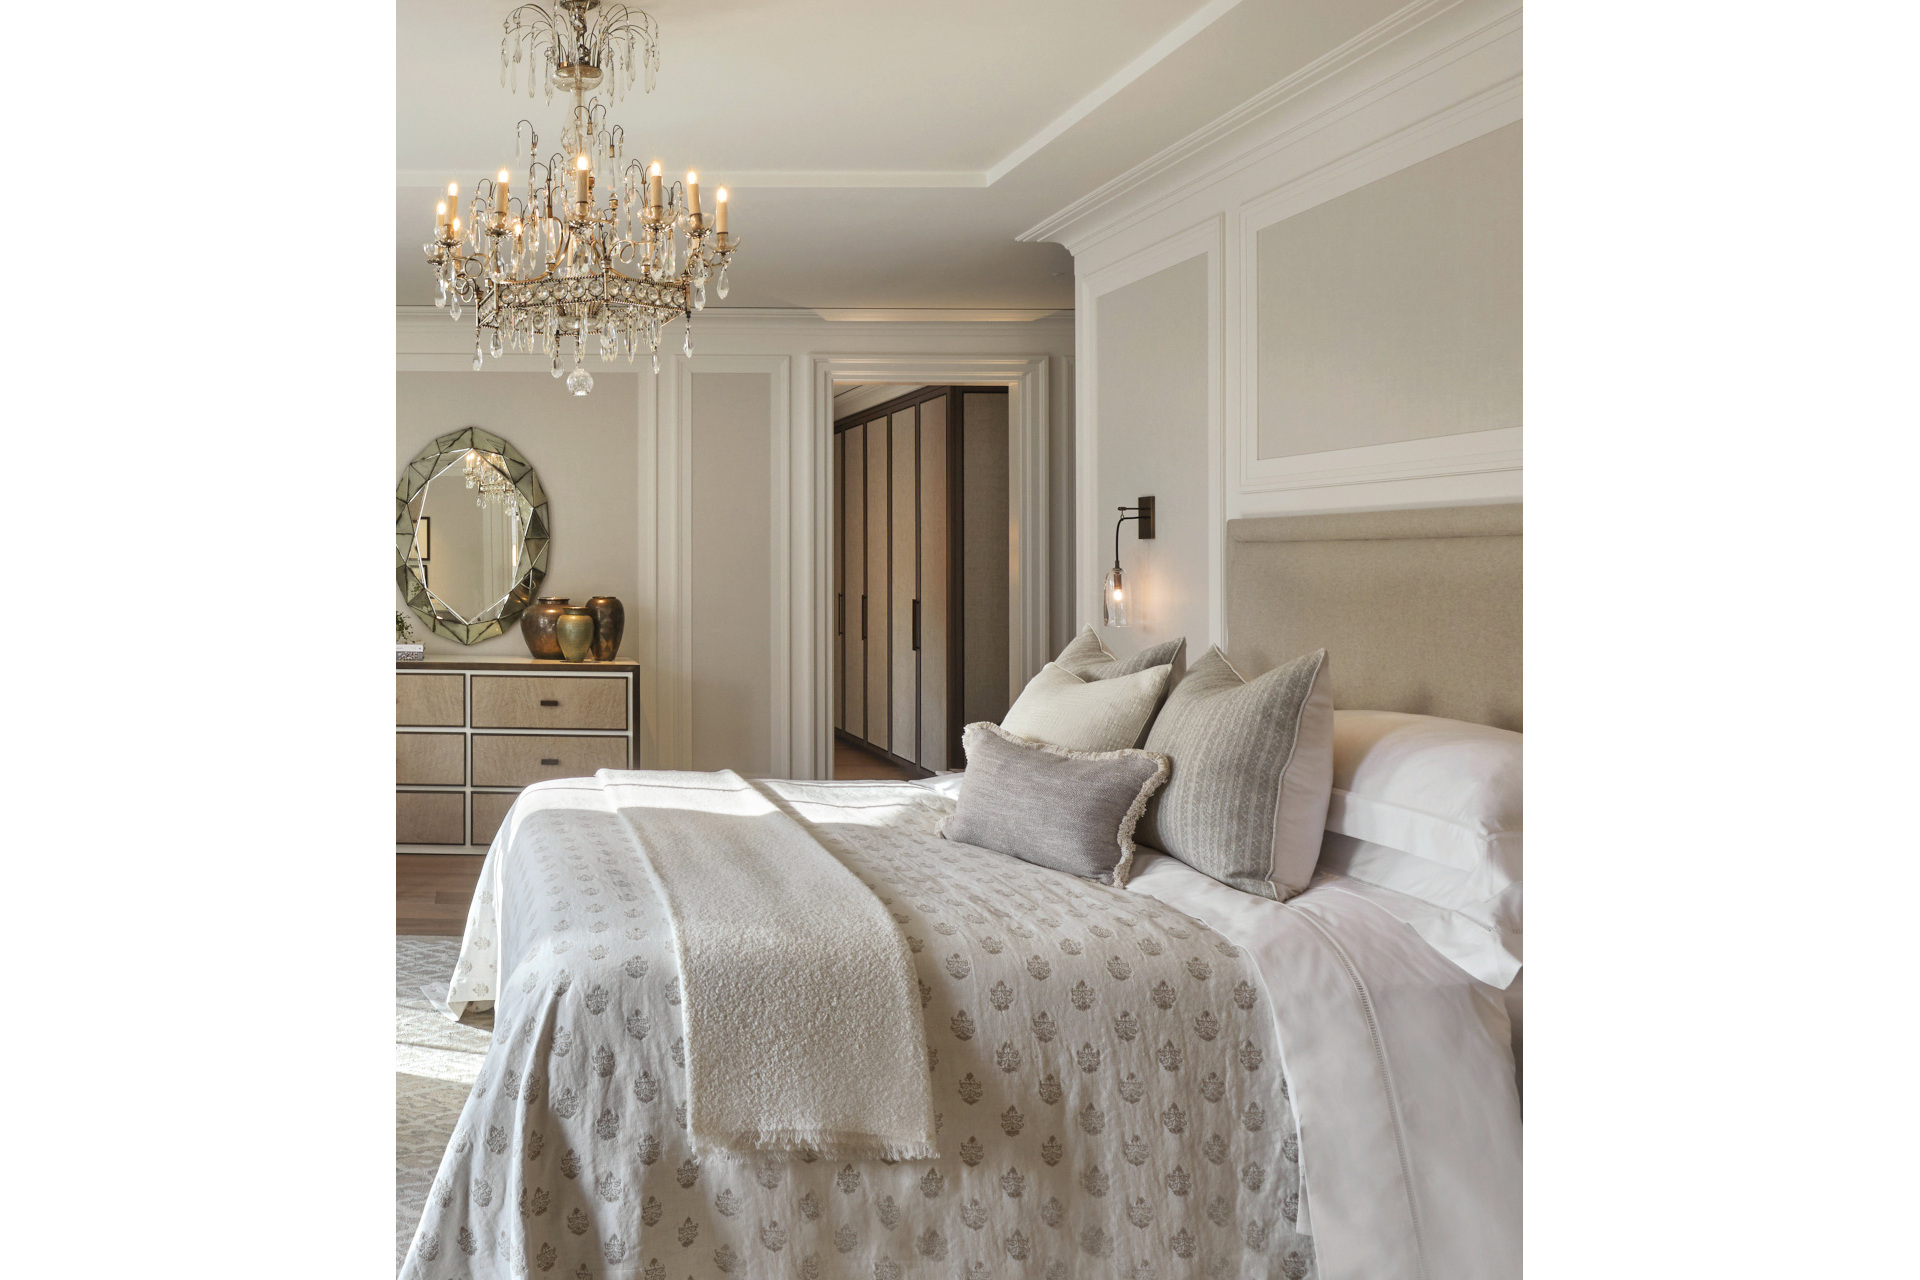 Ornate bedroom